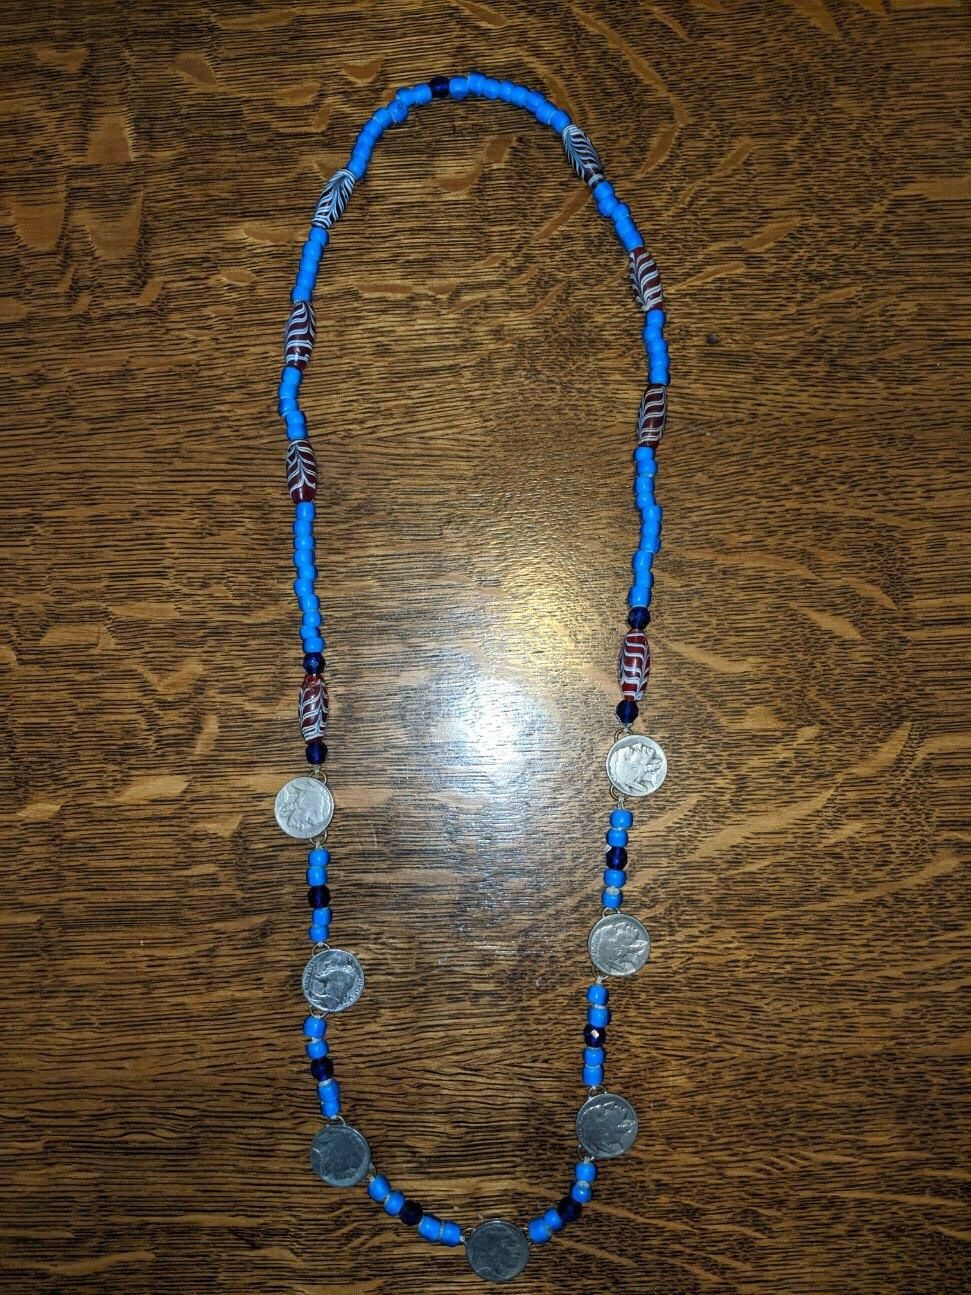 Native American trade beads